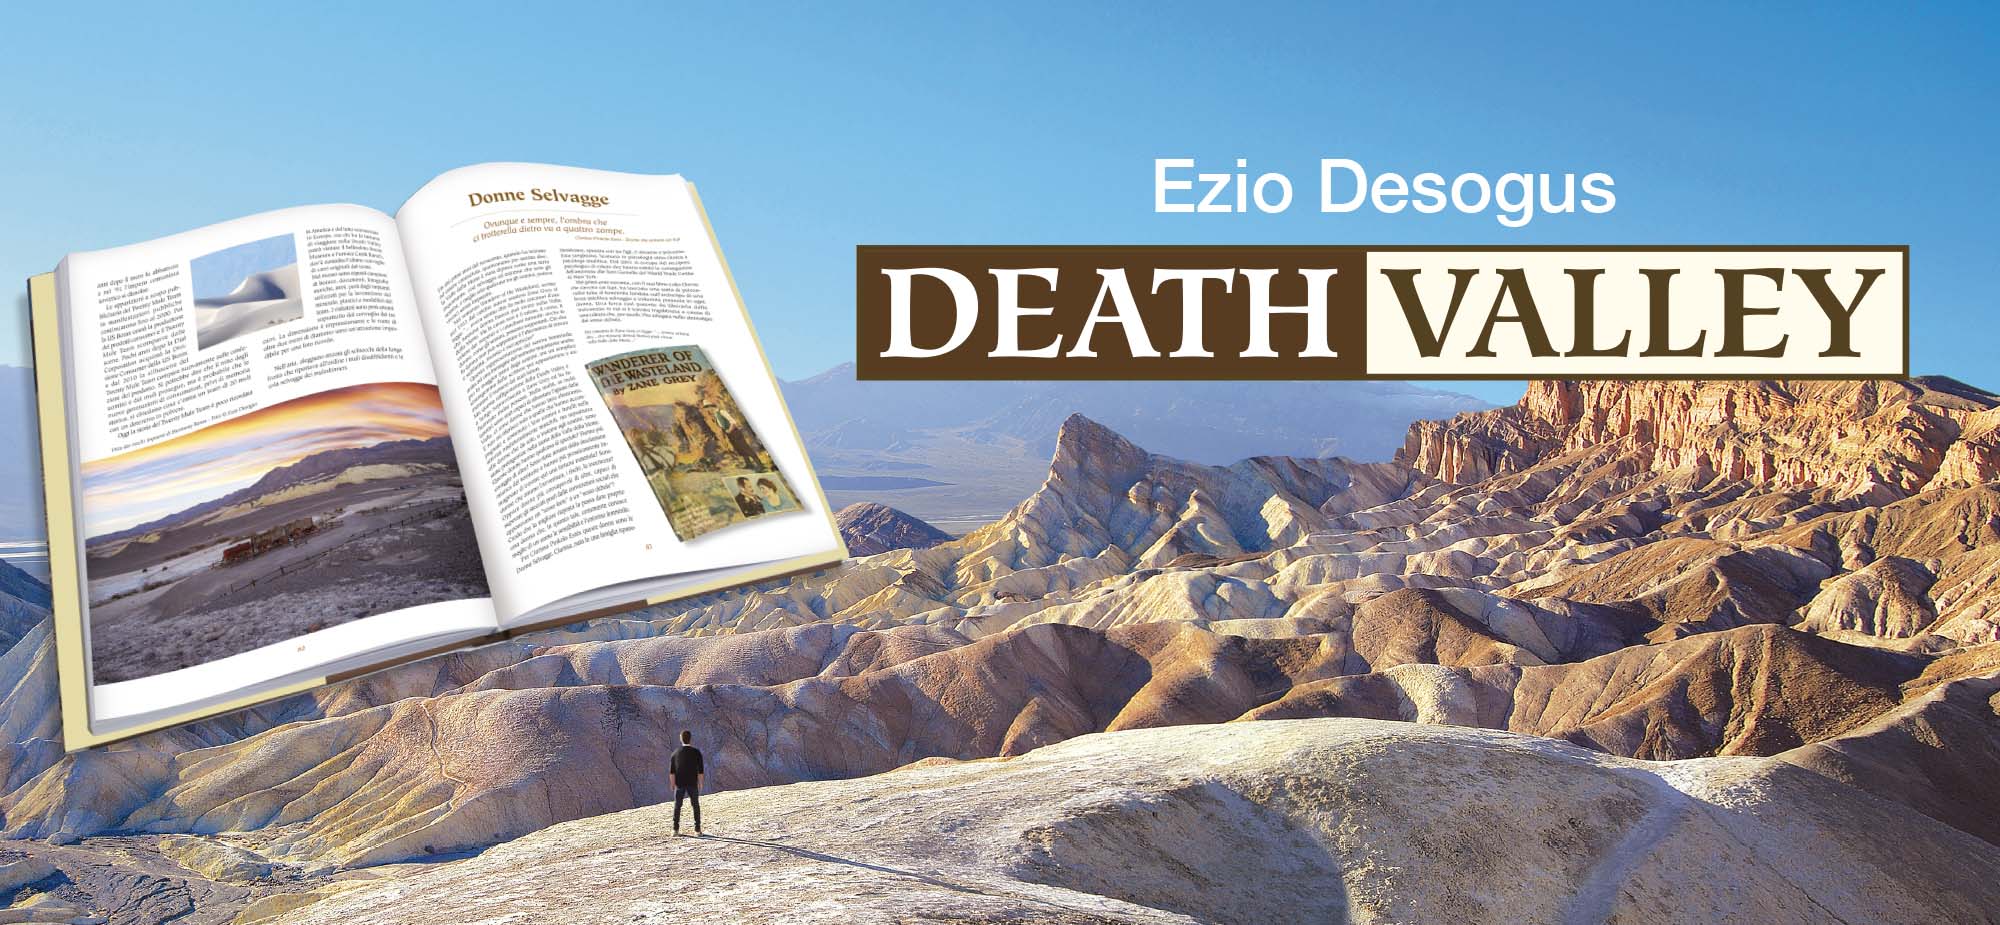 death valley libro valle della morte zabriskie point